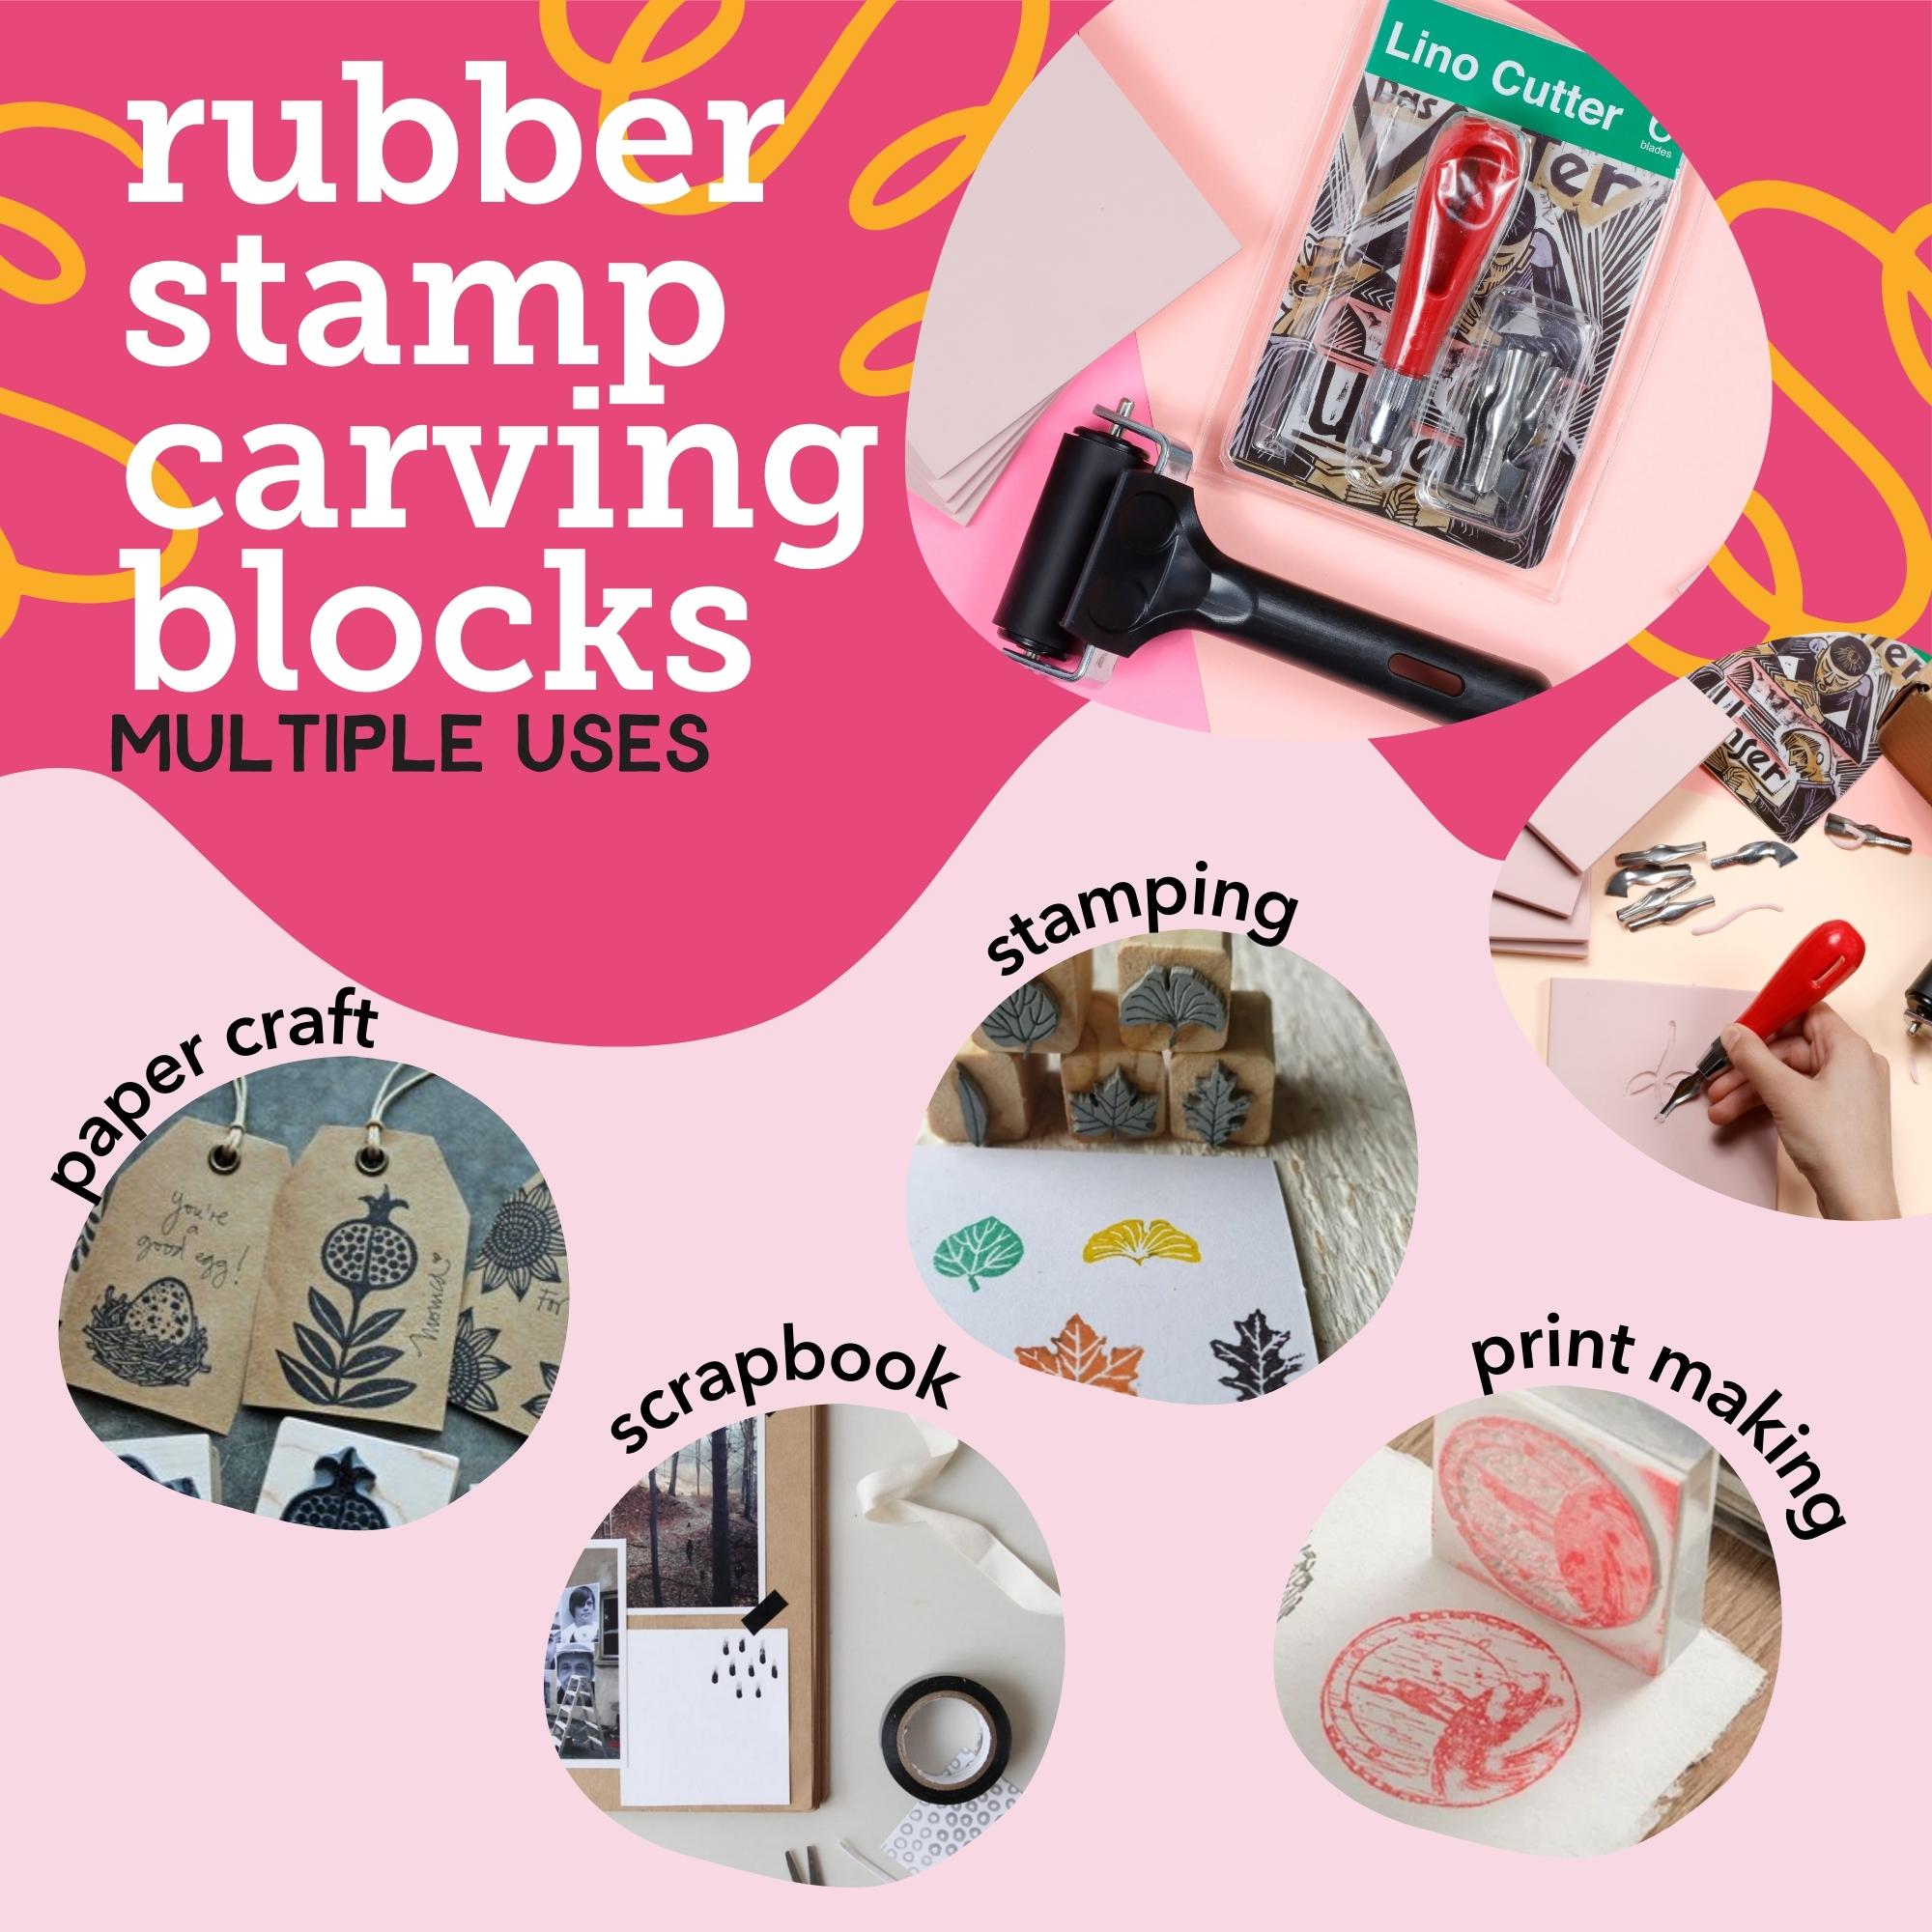  Rubber Stamp Making Kit, Carving Knives Carving Block